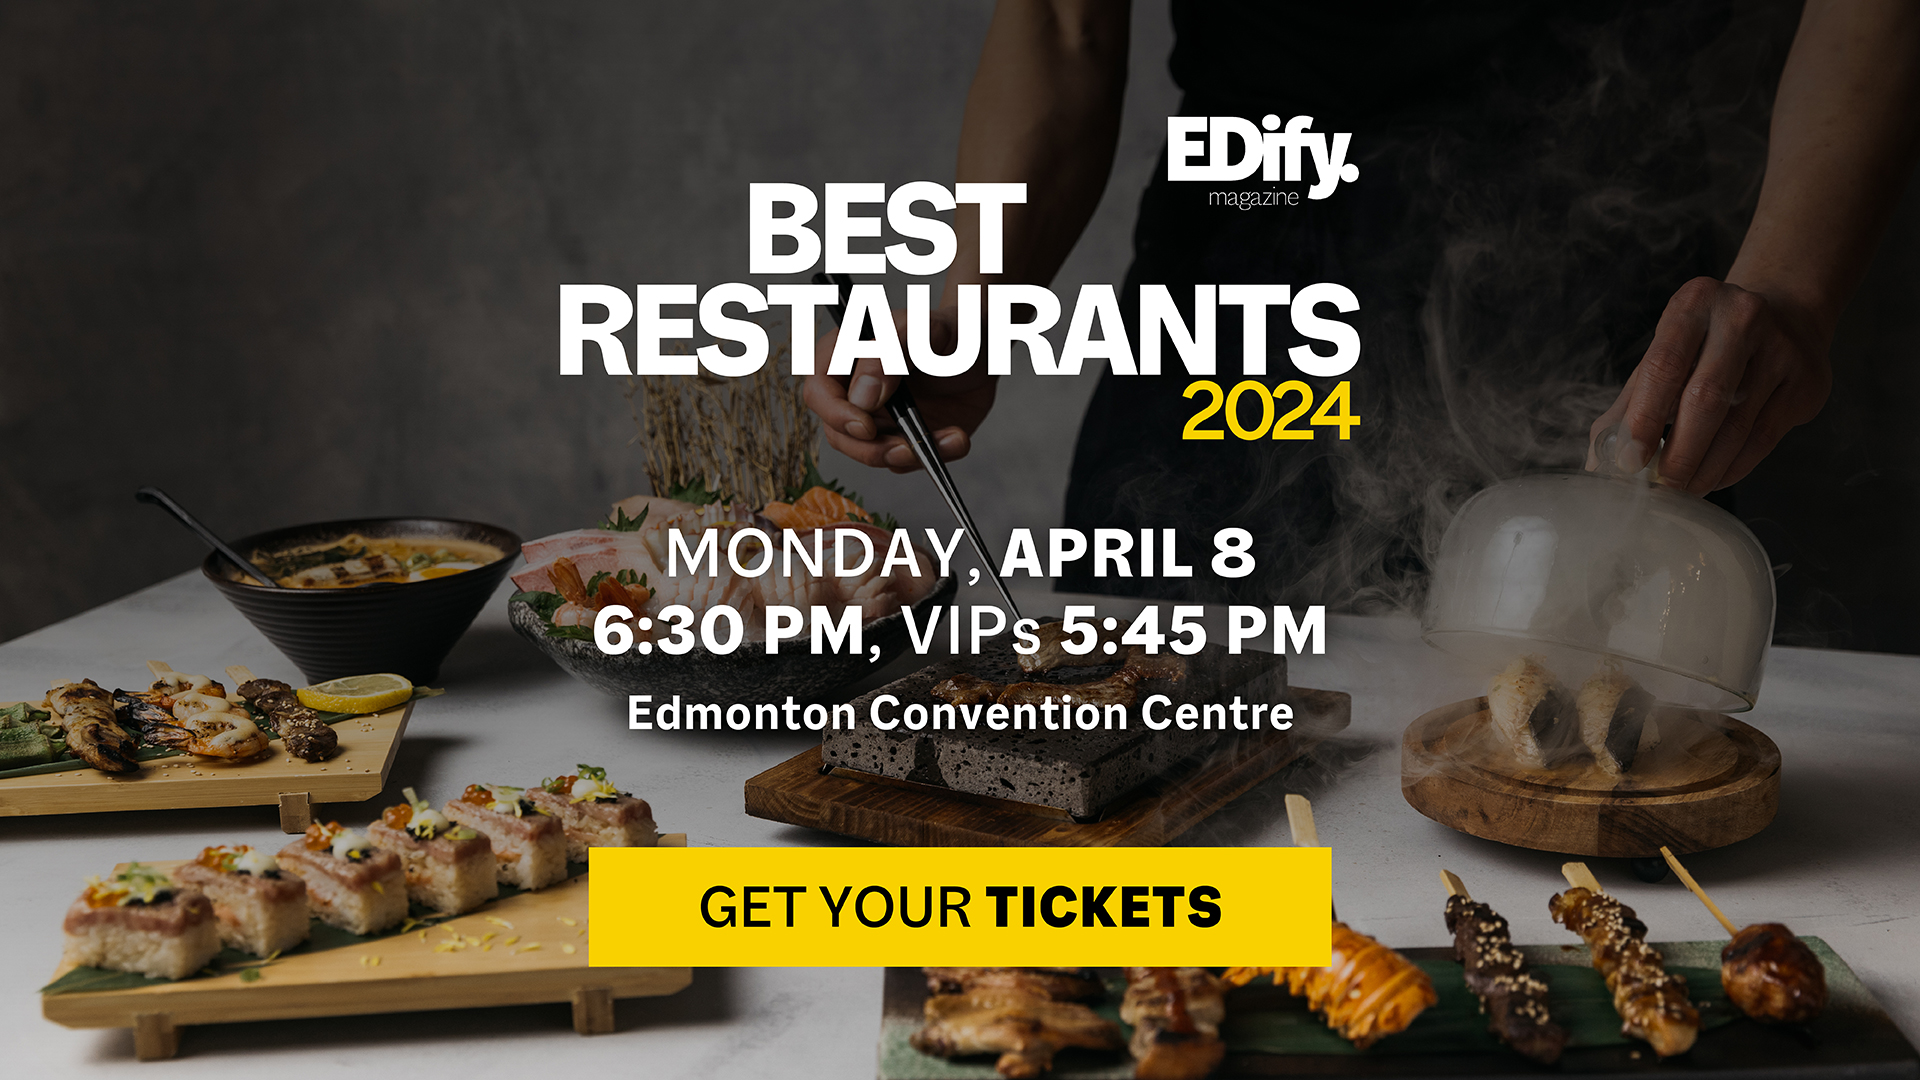 Best Restaurants 2024 Edify Edmonton Tickets